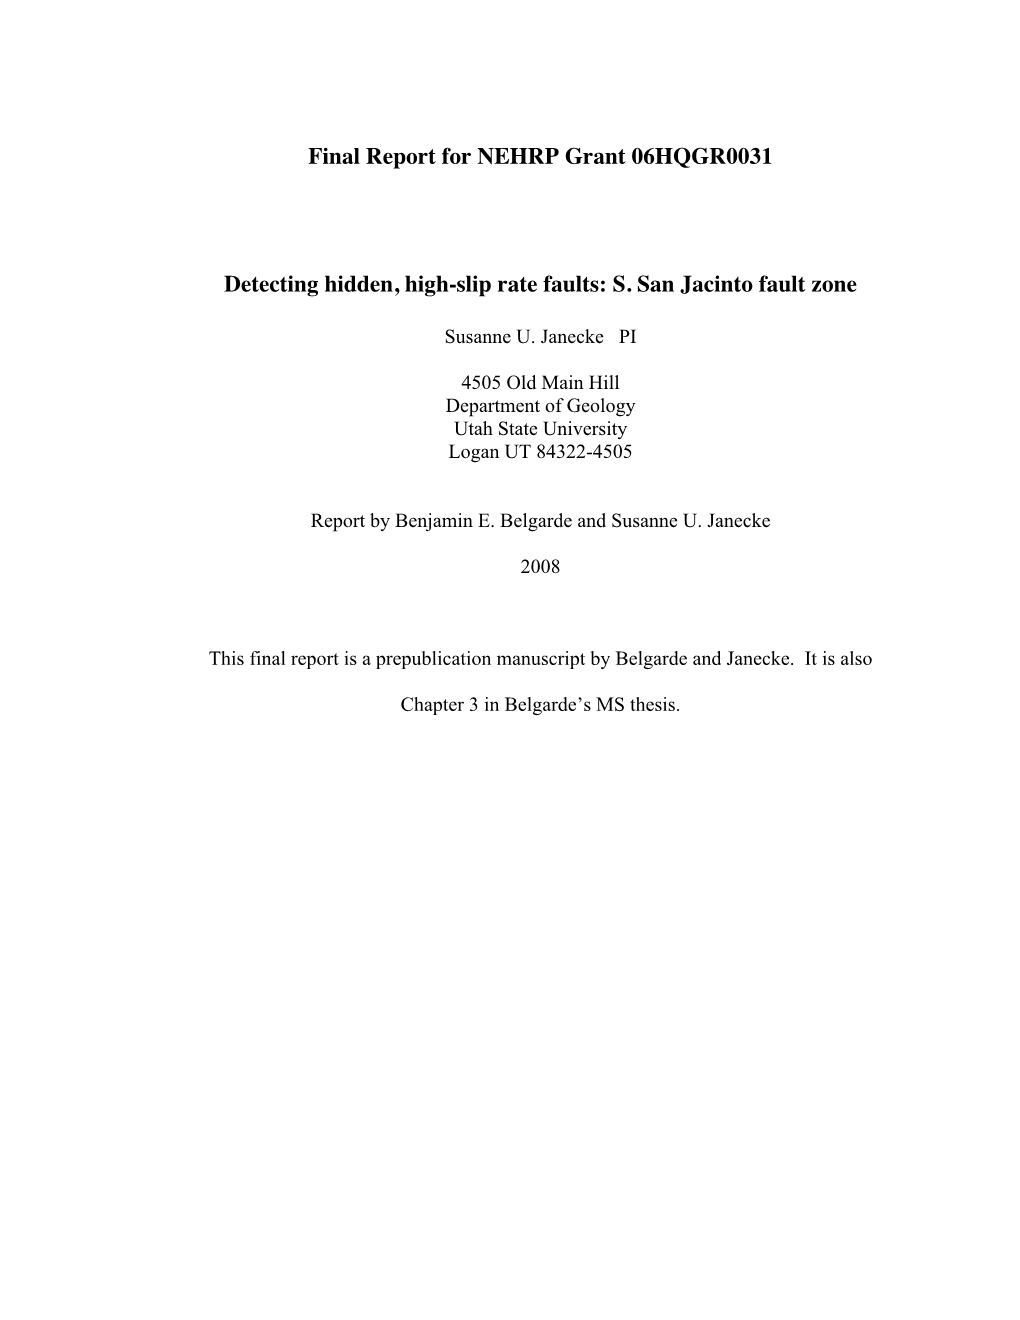 Final Report for NEHRP Grant 06HQGR0031 Detecting Hidden